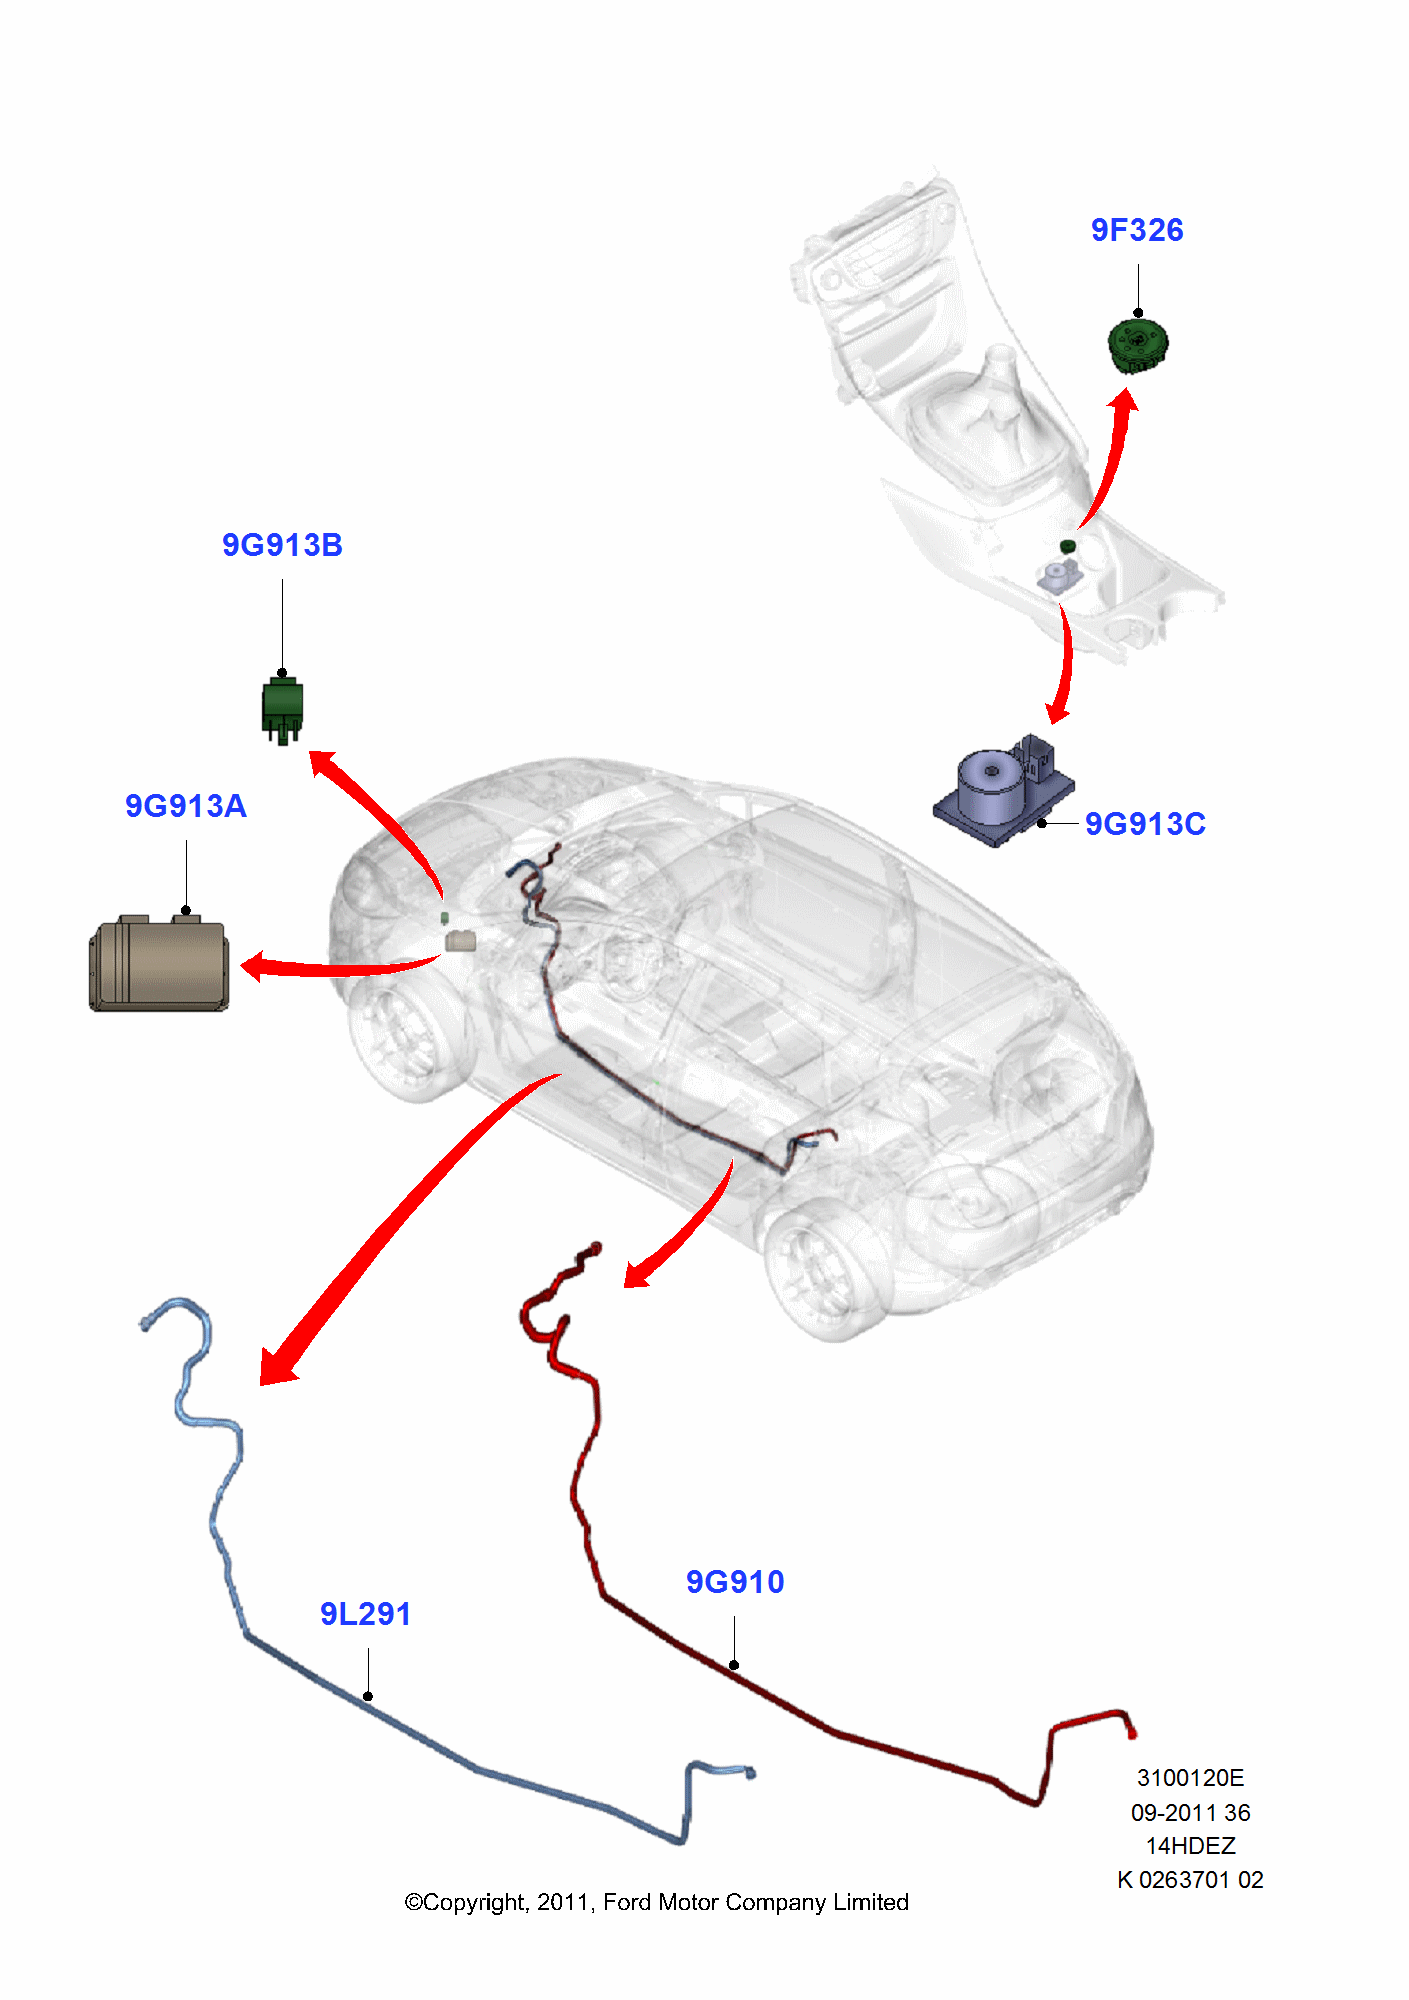 Alternative Fuel System pro Ford Fiesta Fiesta 2008-2012        (CB1)